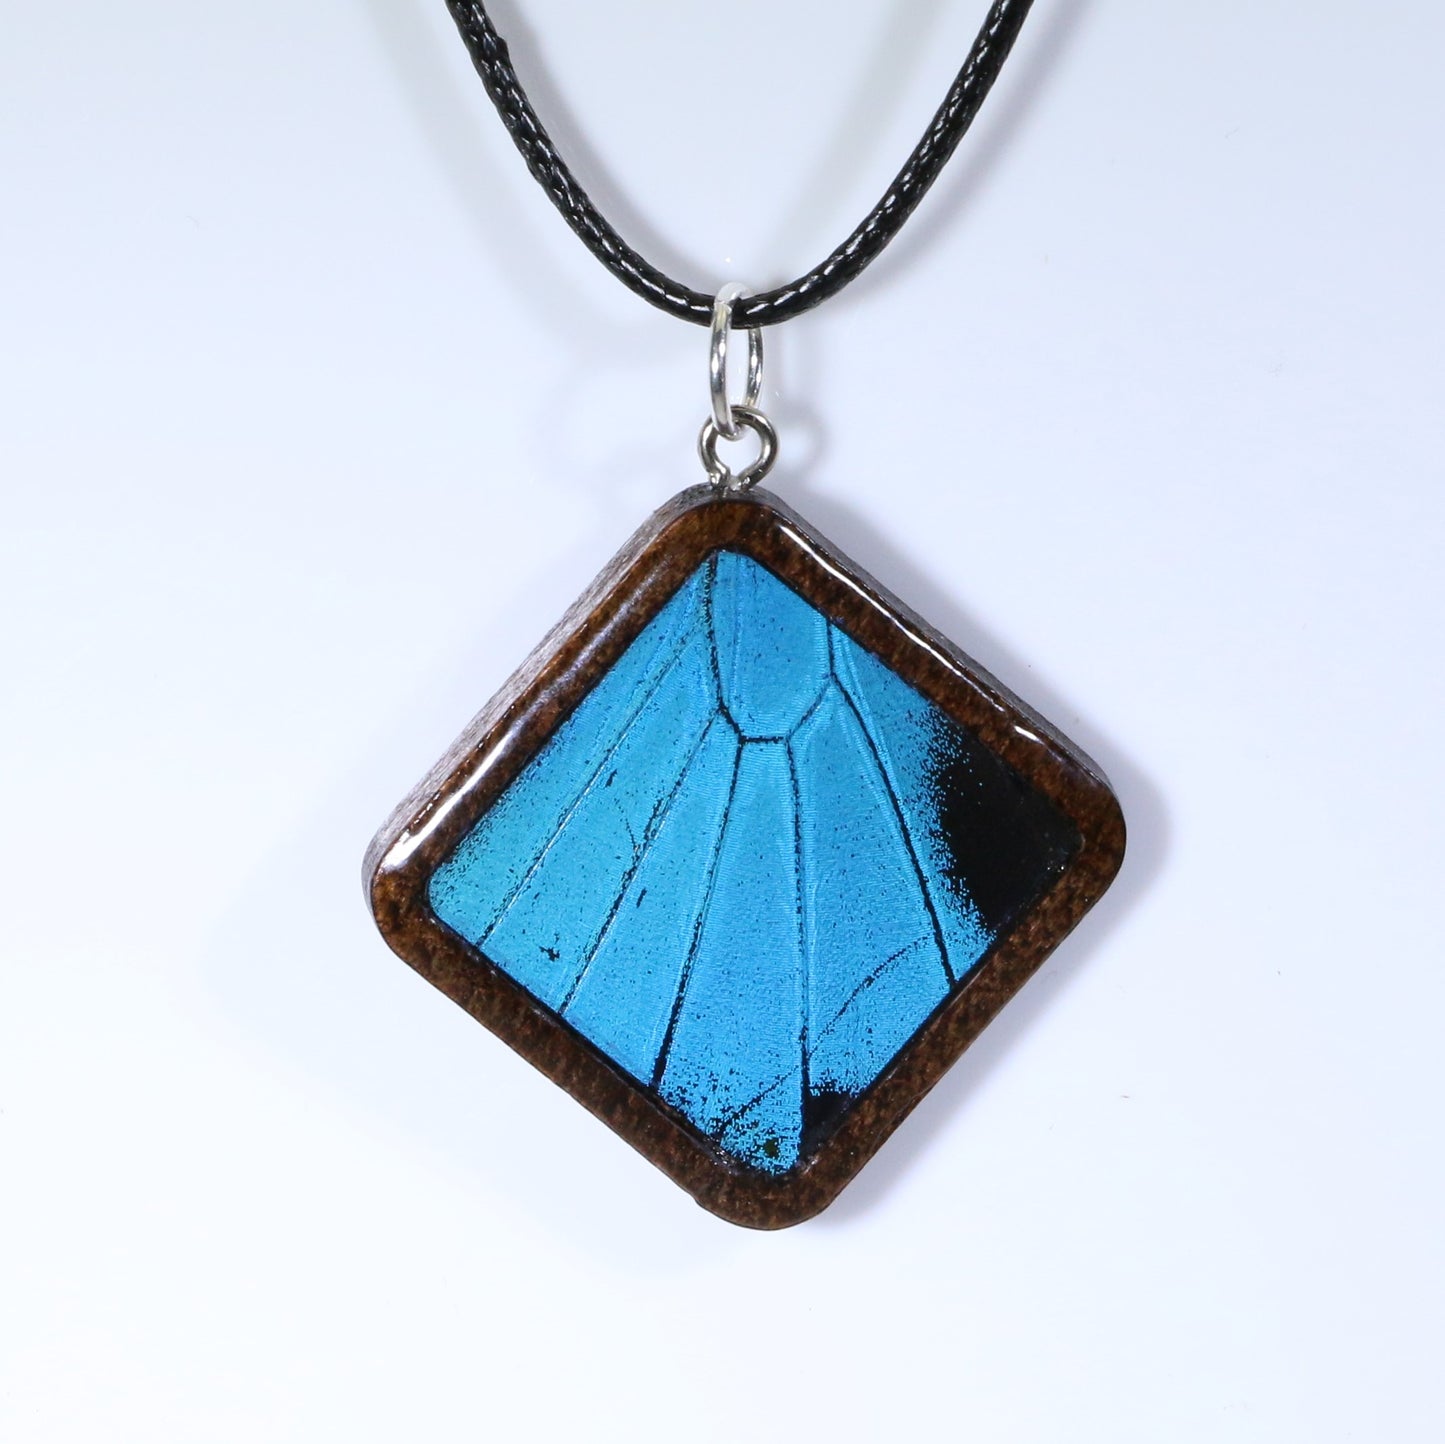 52917 - Real Butterfly Wing Jewelry - Pendant - Dark Wood - Large - Diamond Shape - Blue Mountain Swallowtail